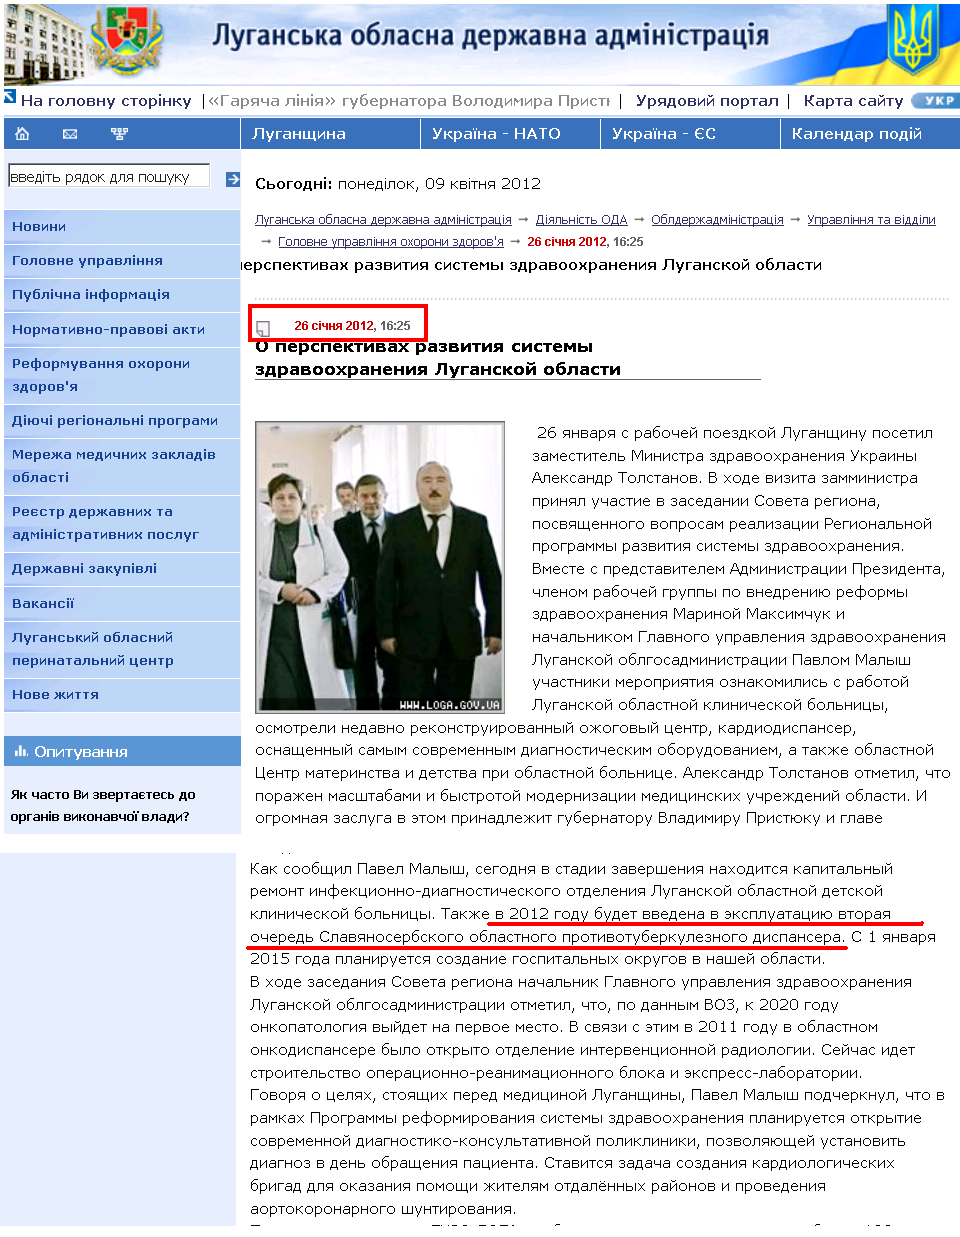 http://www.loga.gov.ua/oda/about/depart/oz/news/2012/01/26/26_01_2012_1.html